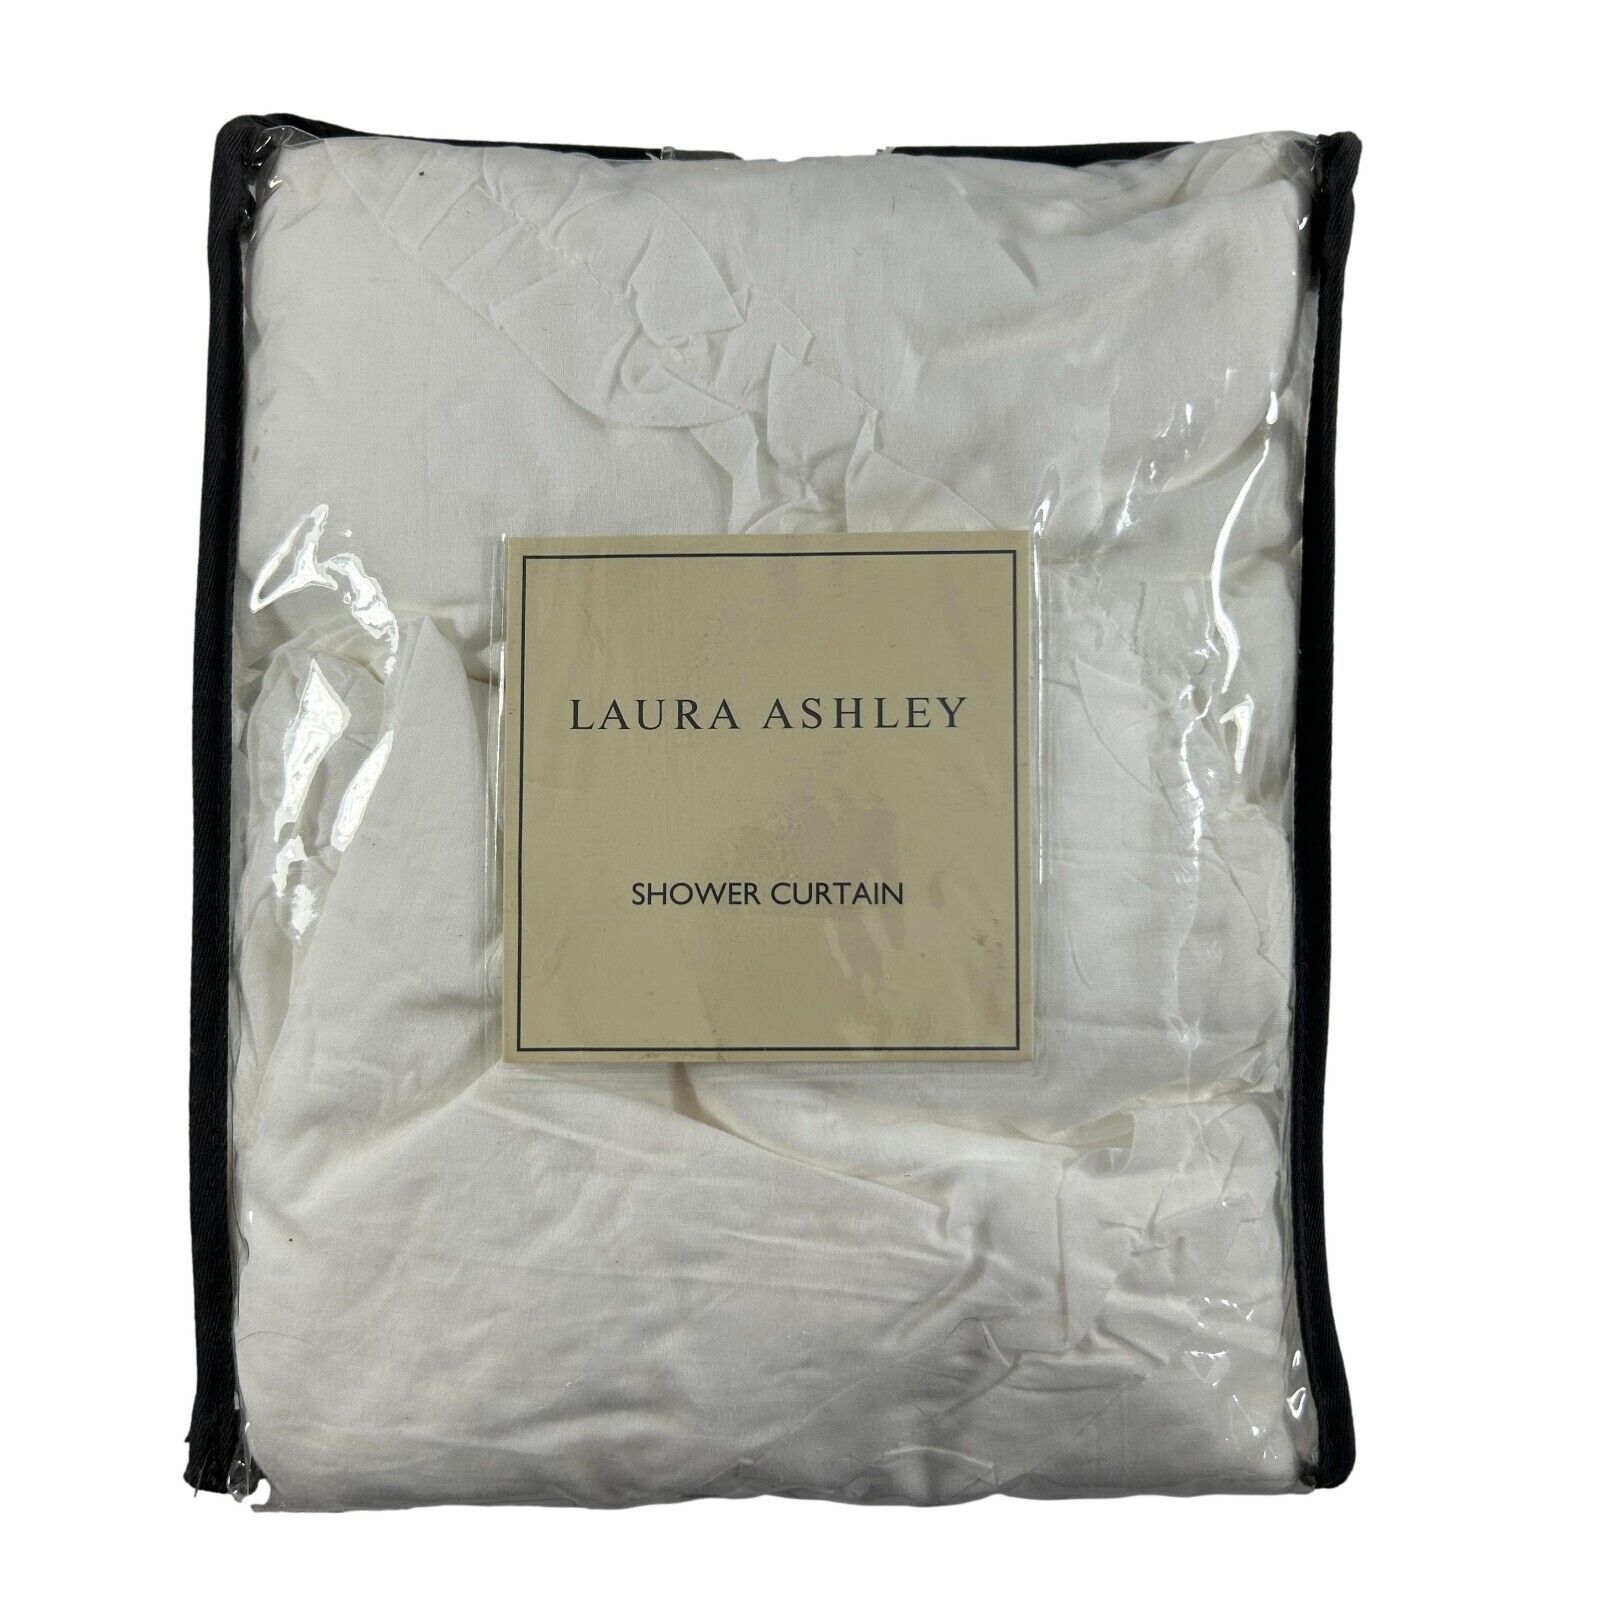 Laura Ashley Adeline Shower Curtain 72" Lattice Applique Ruffles Cotton White - $28.71